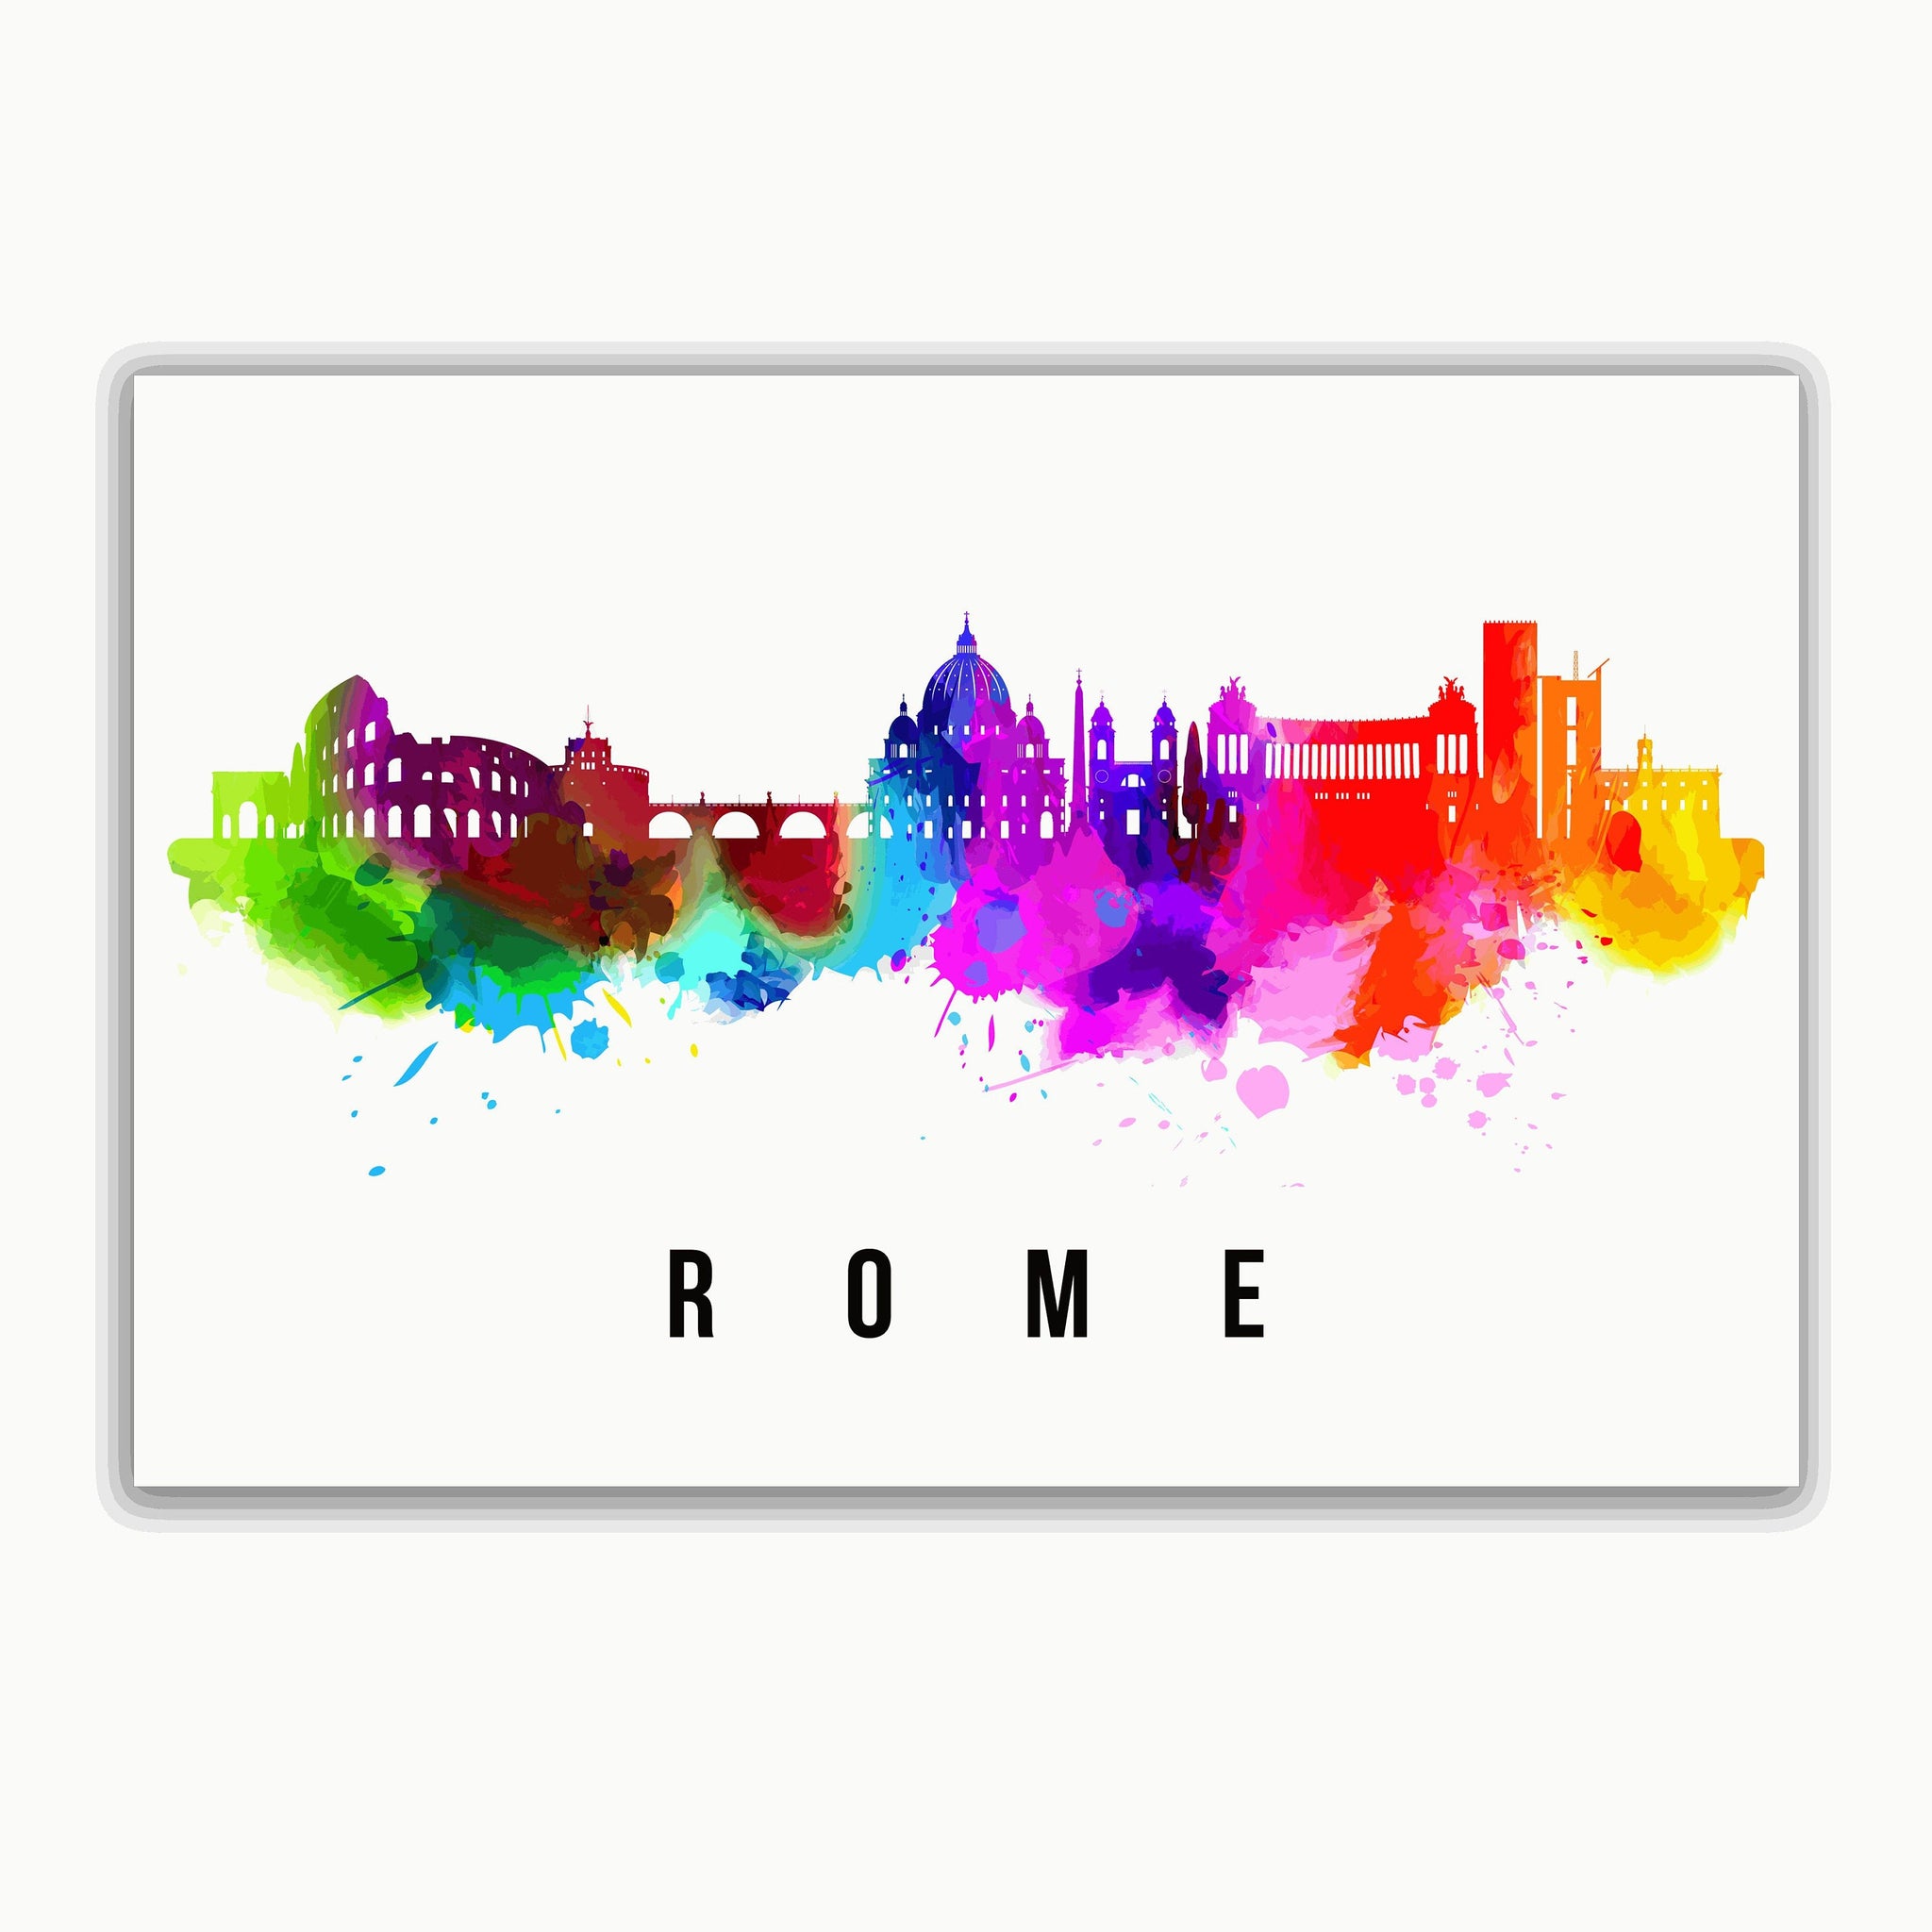 ROME - ITALY Poster, Skyline Poster Cityscape and Landmark Rome City Illustration Home Wall Art, Office Decor